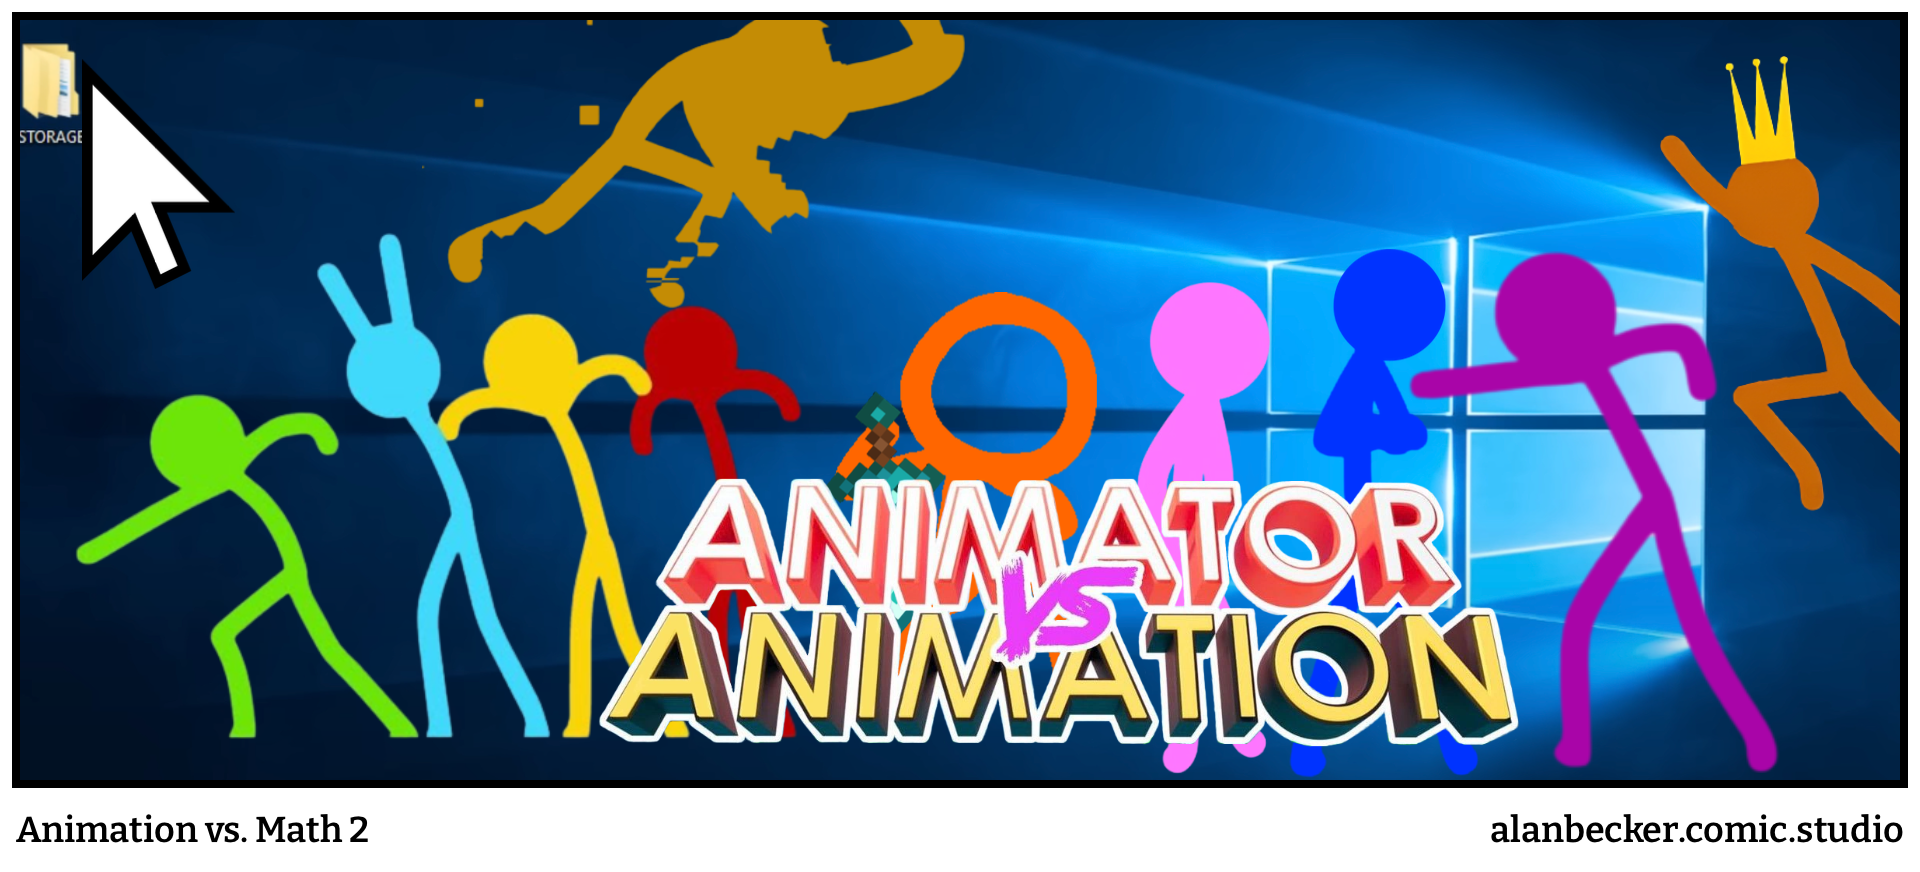 Animation vs. Math 2